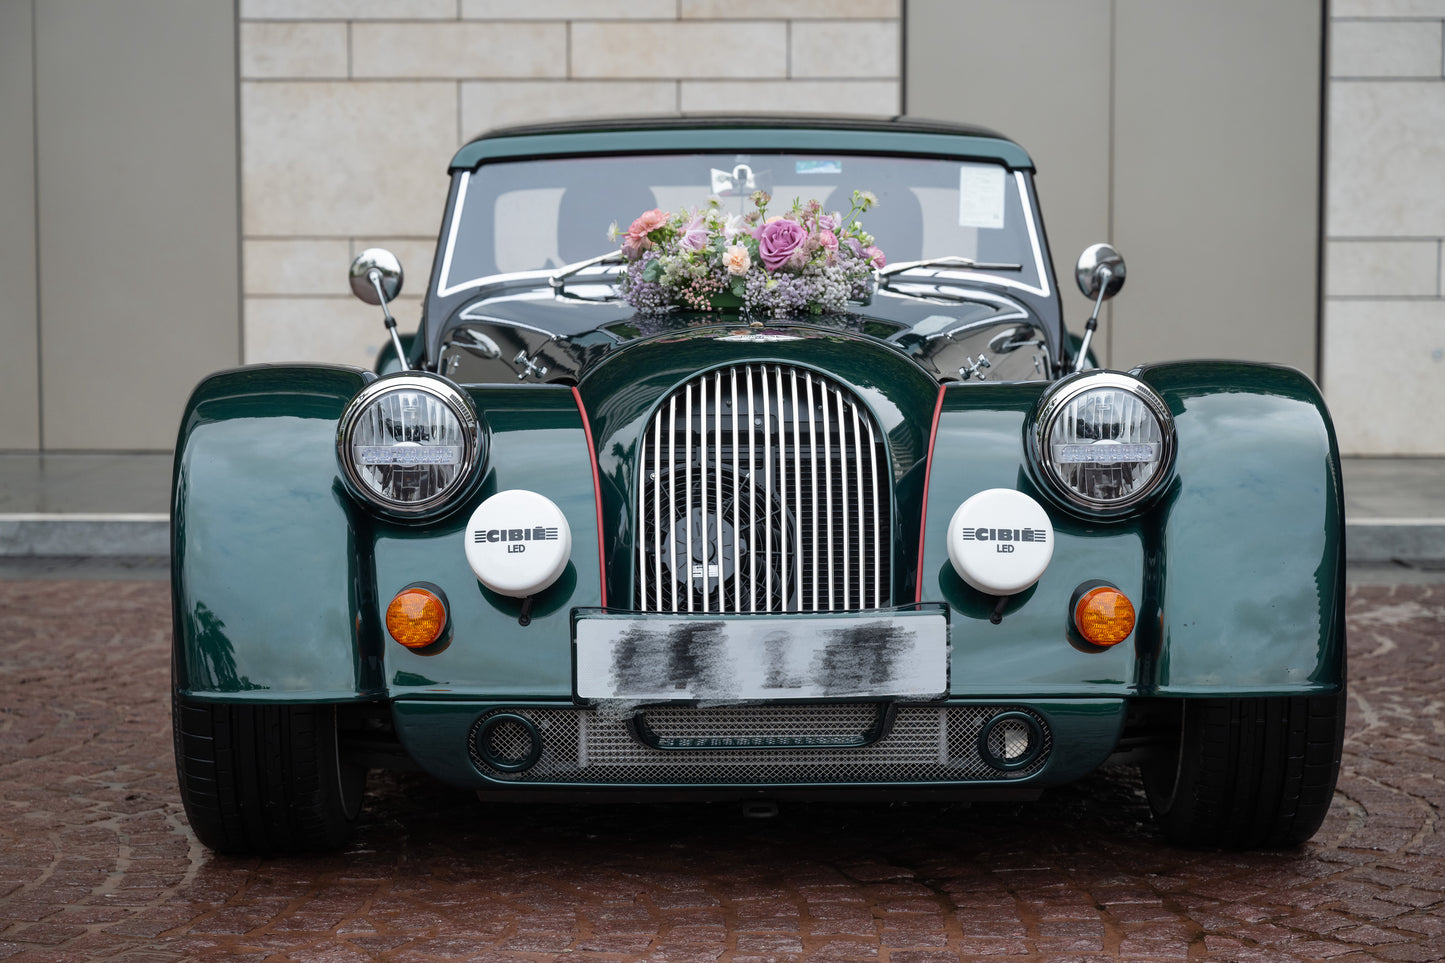 Bespoke Wedding Car Decorations